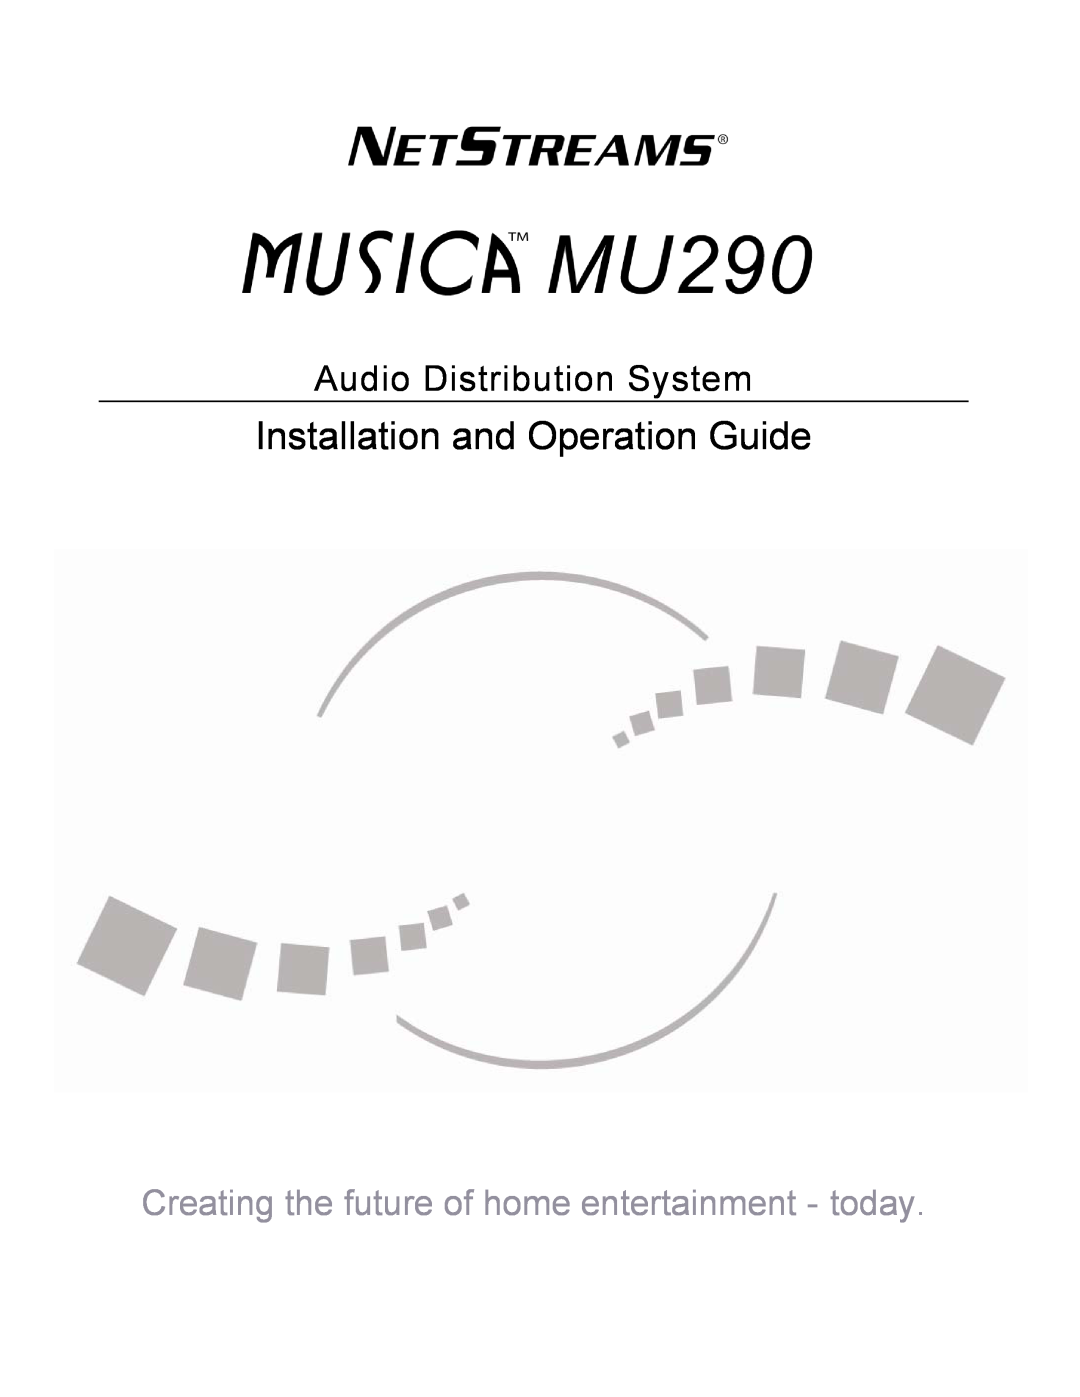 Musica MU290 installation and operation guide Installation and Operation Guide, Audio Distribution System 